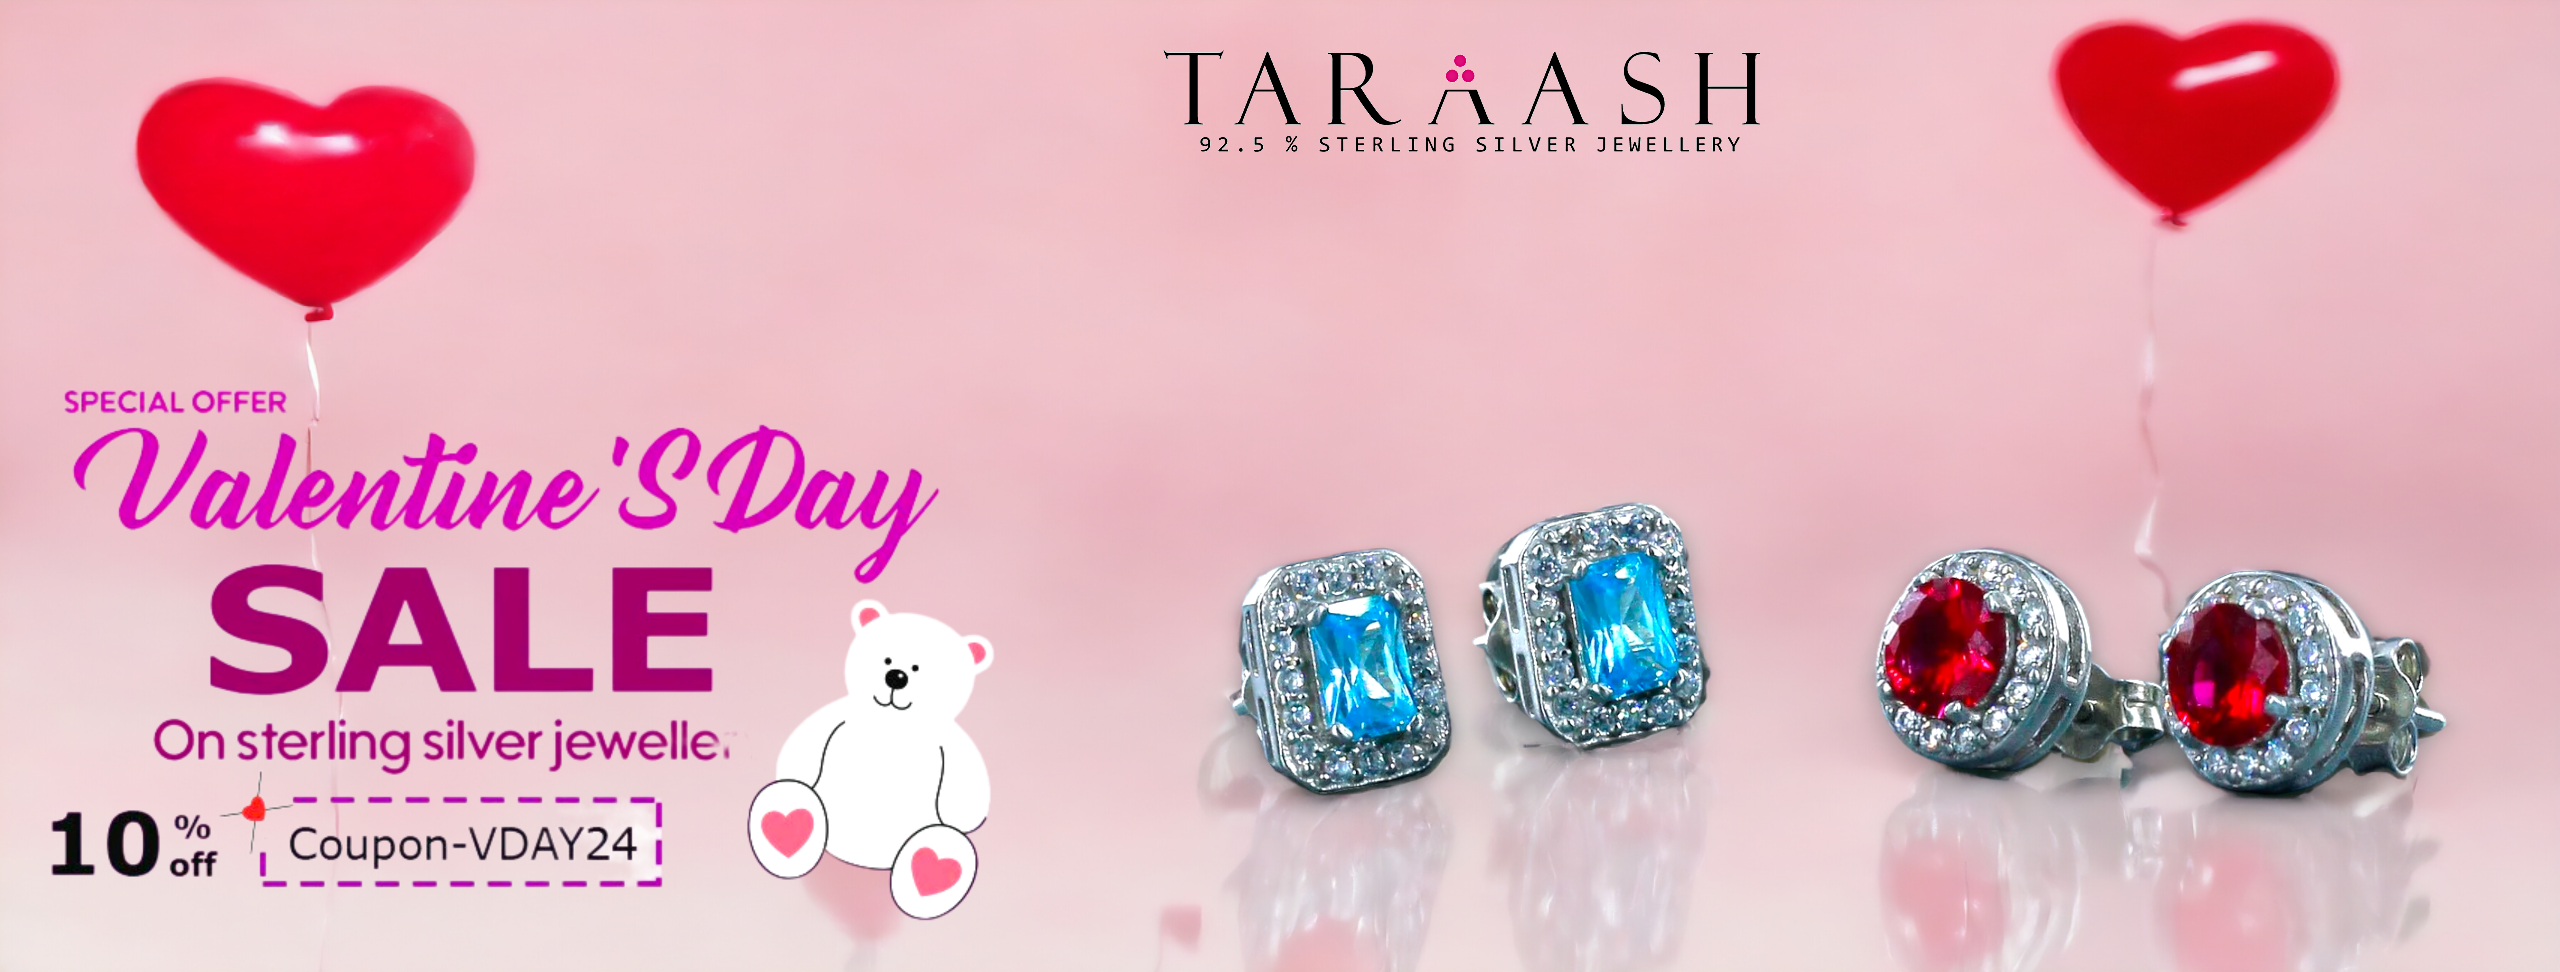 Taraash - Taraash Valentines Day Jewellery Coupons: Extra 10% Off